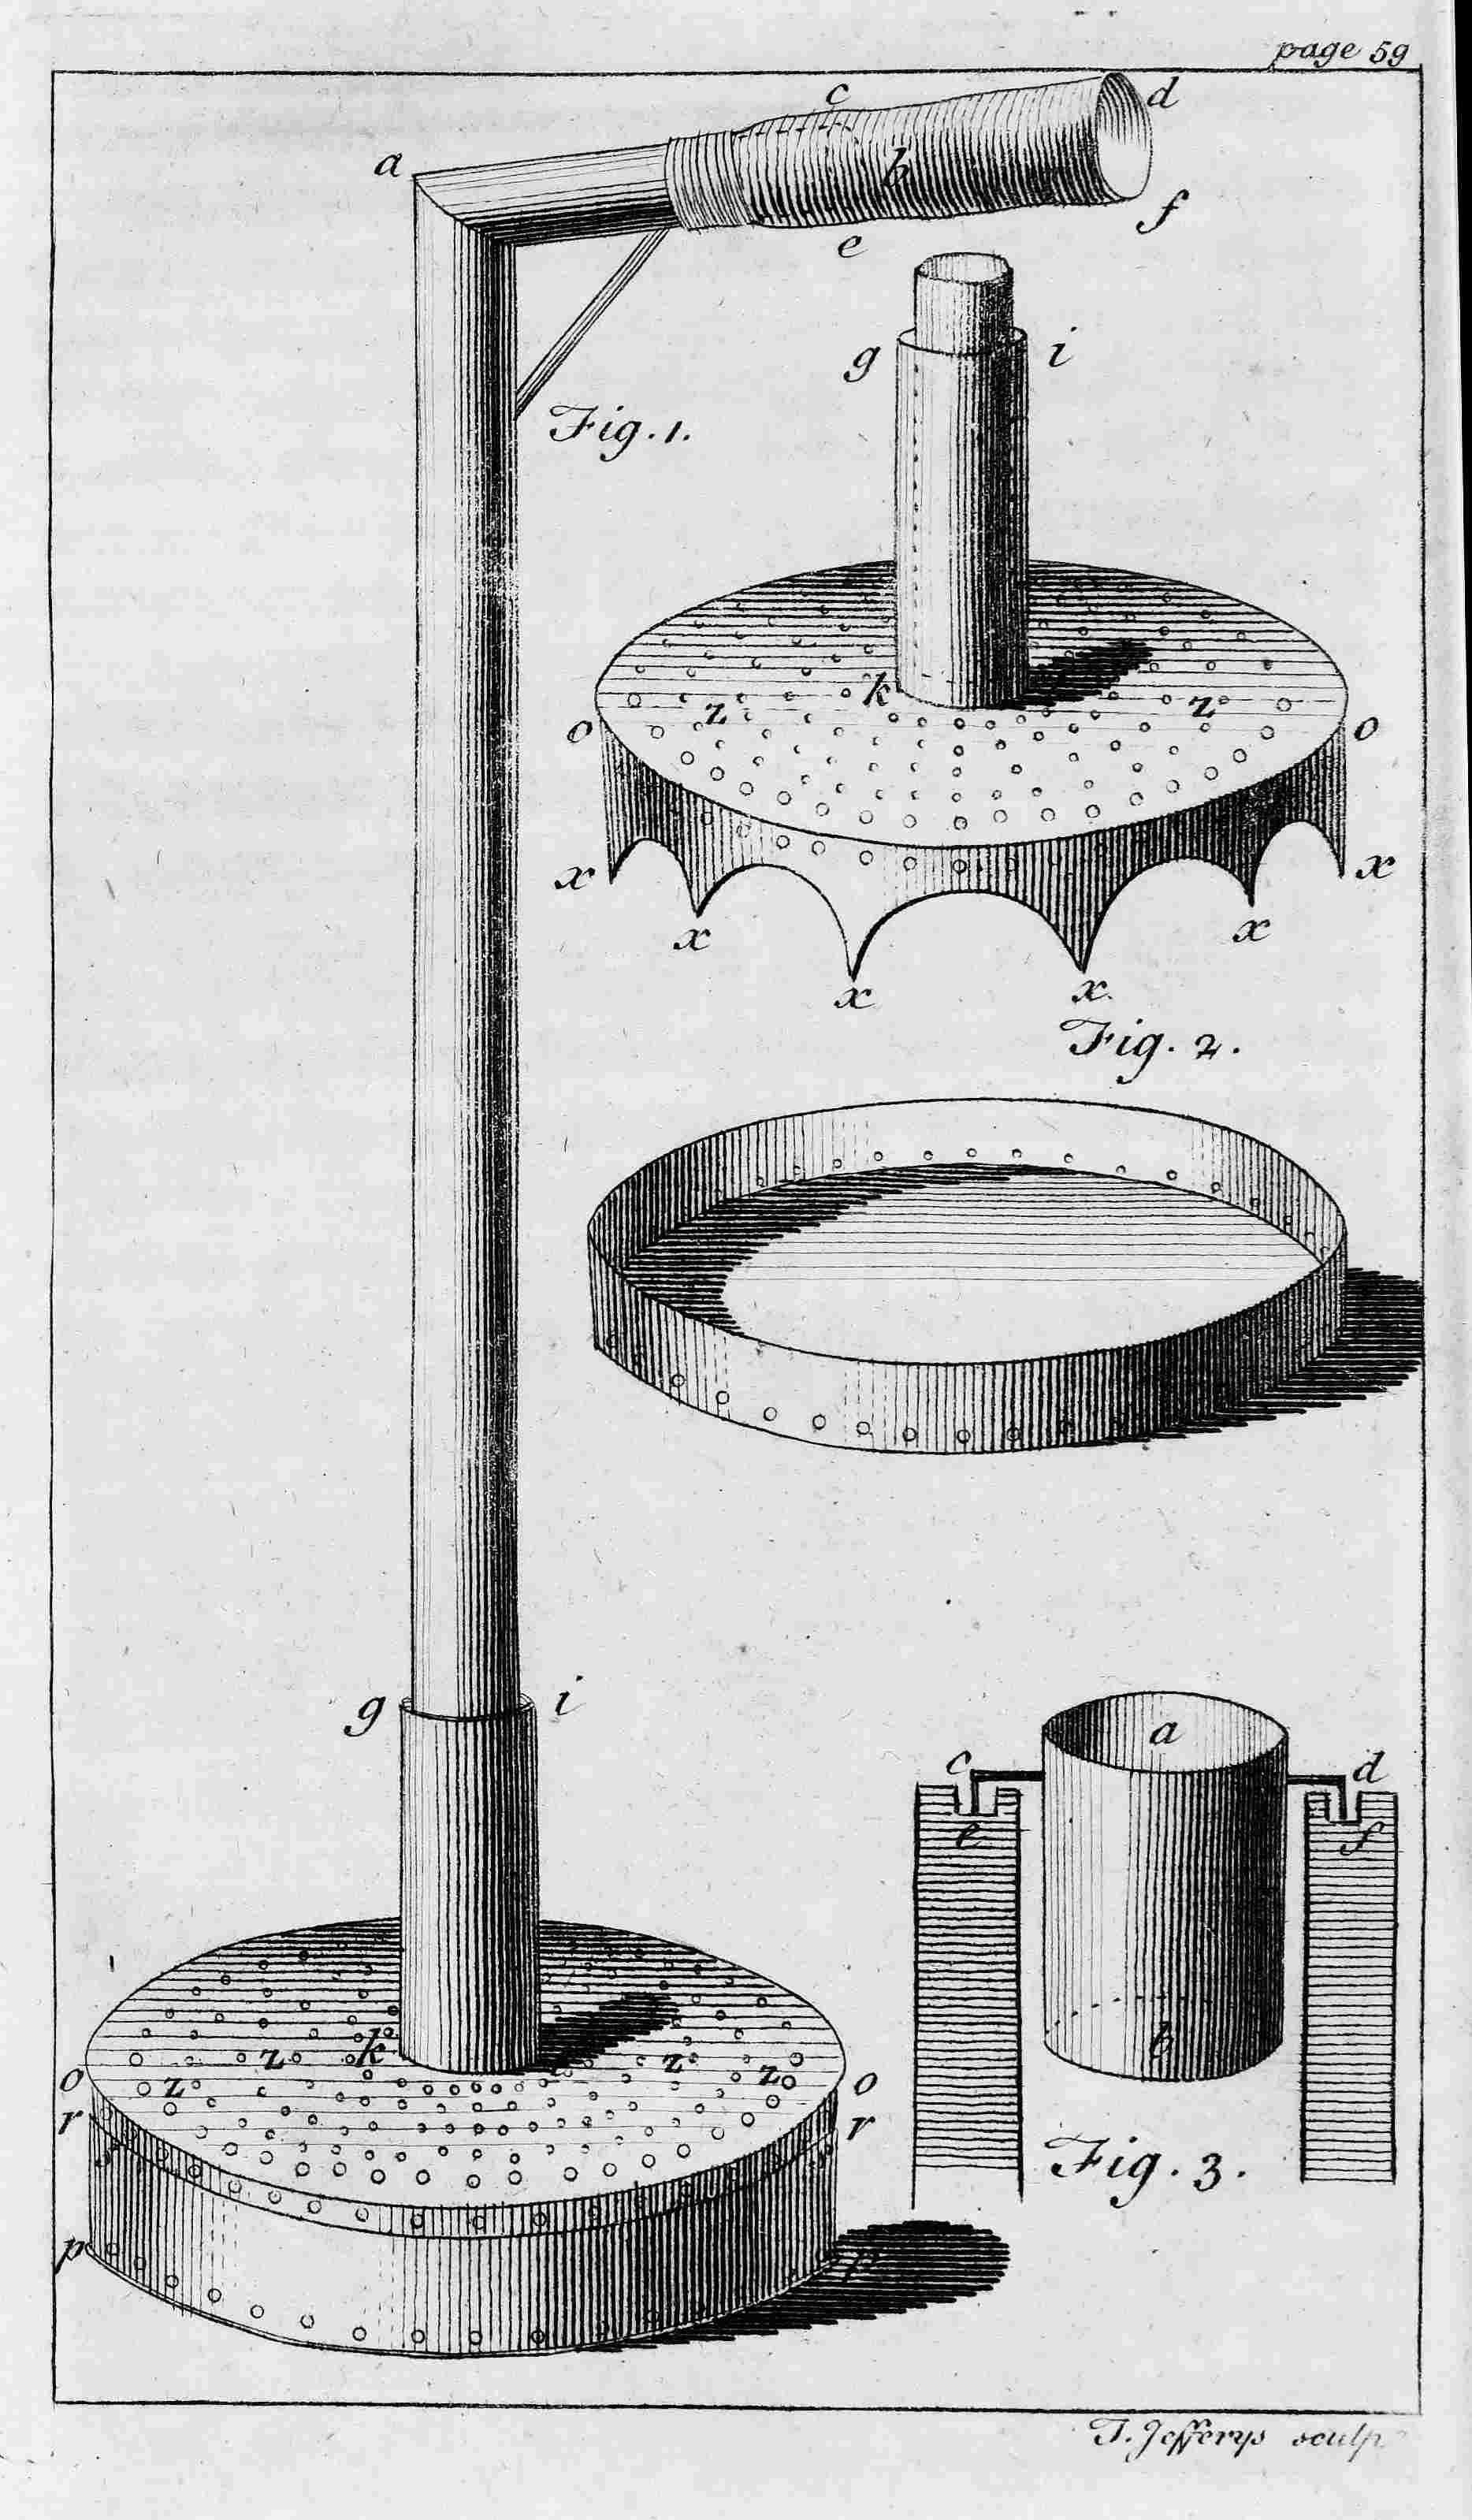 Illustration of Apparatus